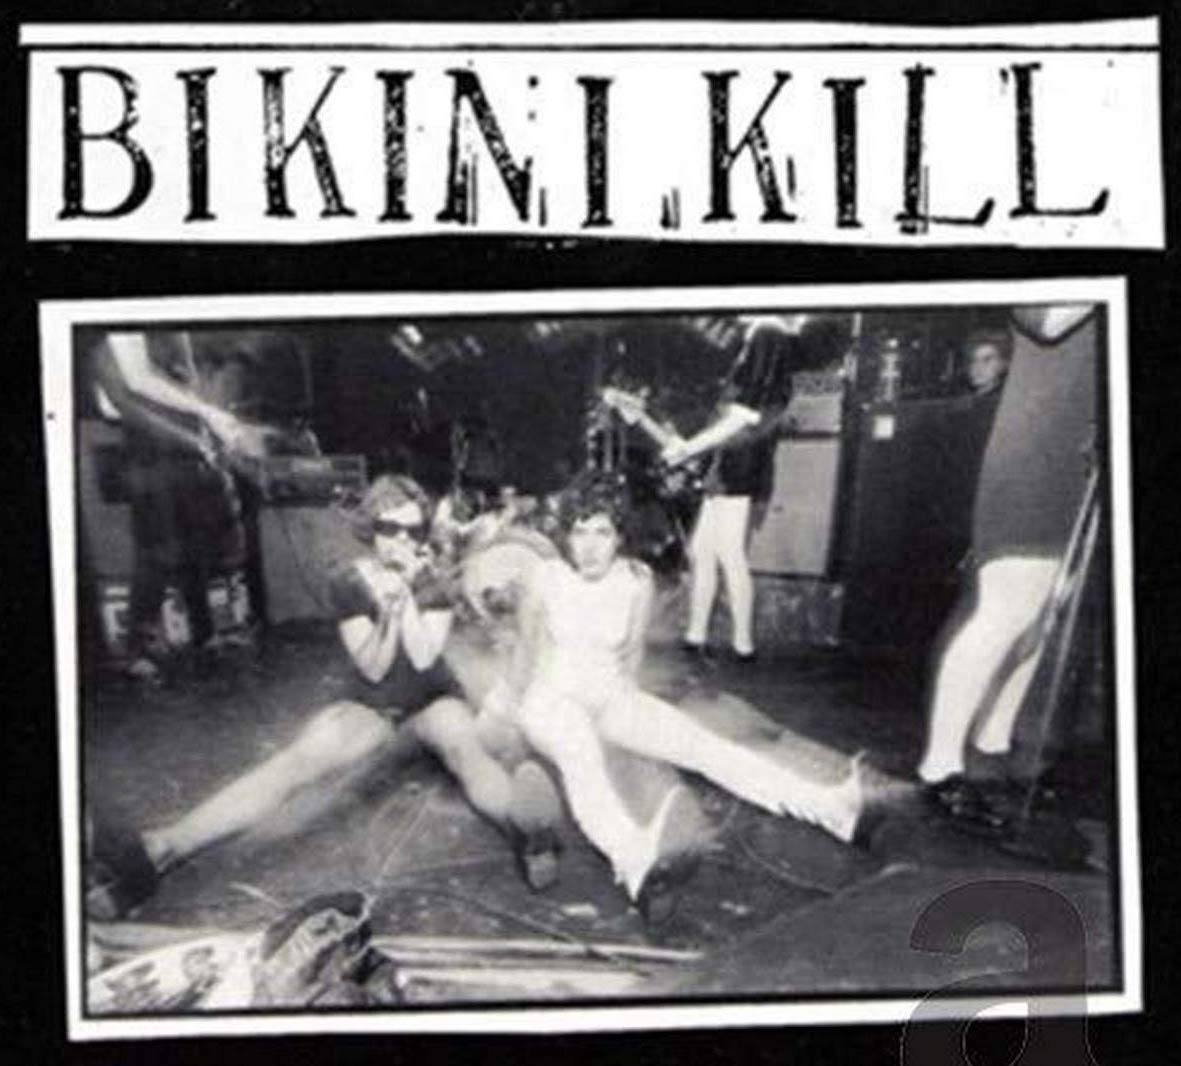 Bikini Kill EP, Bikini Kill